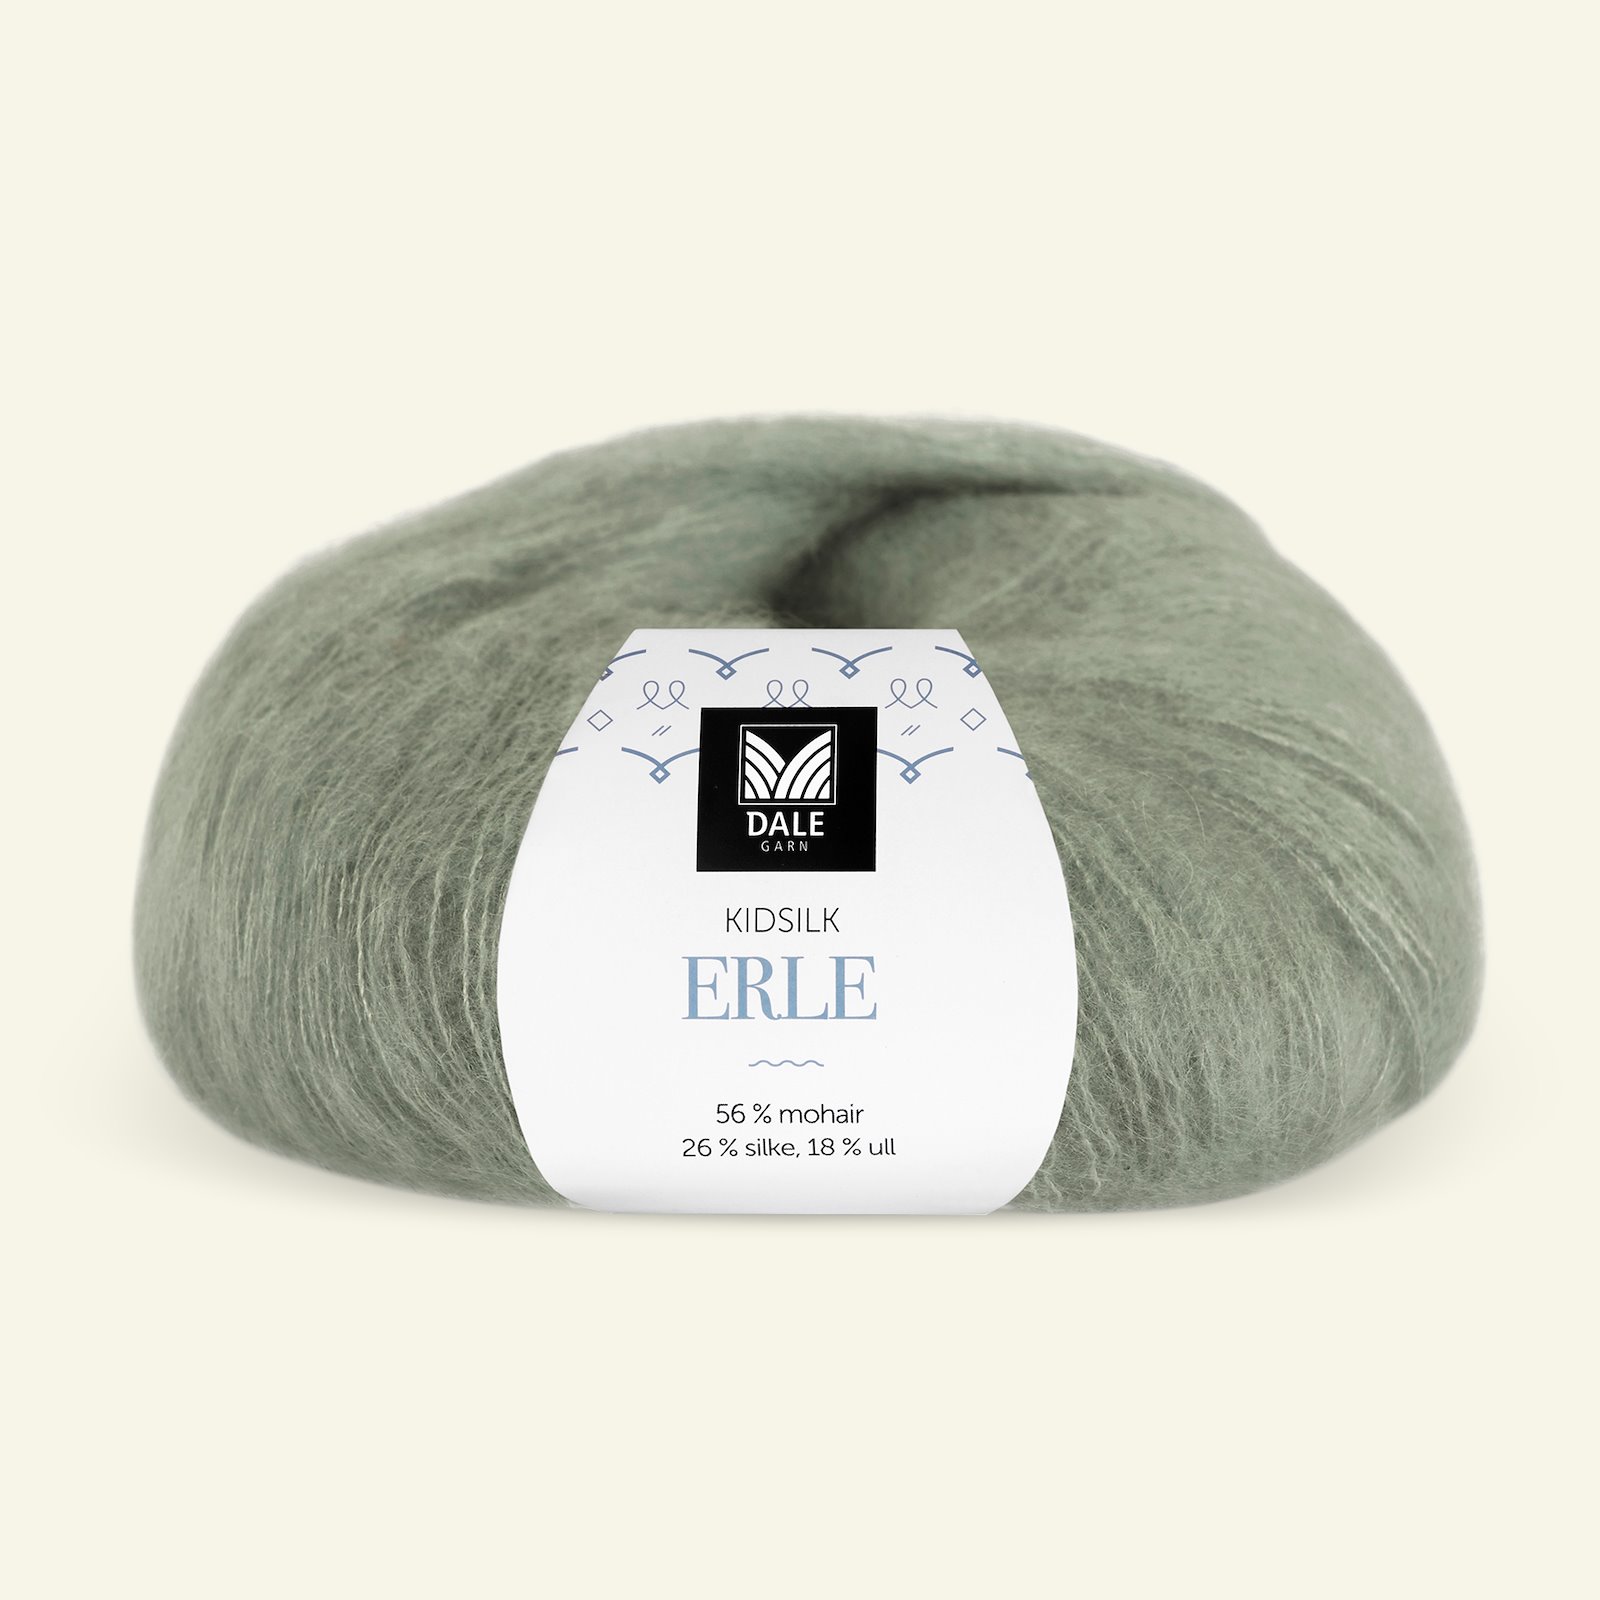 Dale Garn, silk mohair wool yarn "Kidsilk Erle", jade green (9047) 90000790_pack